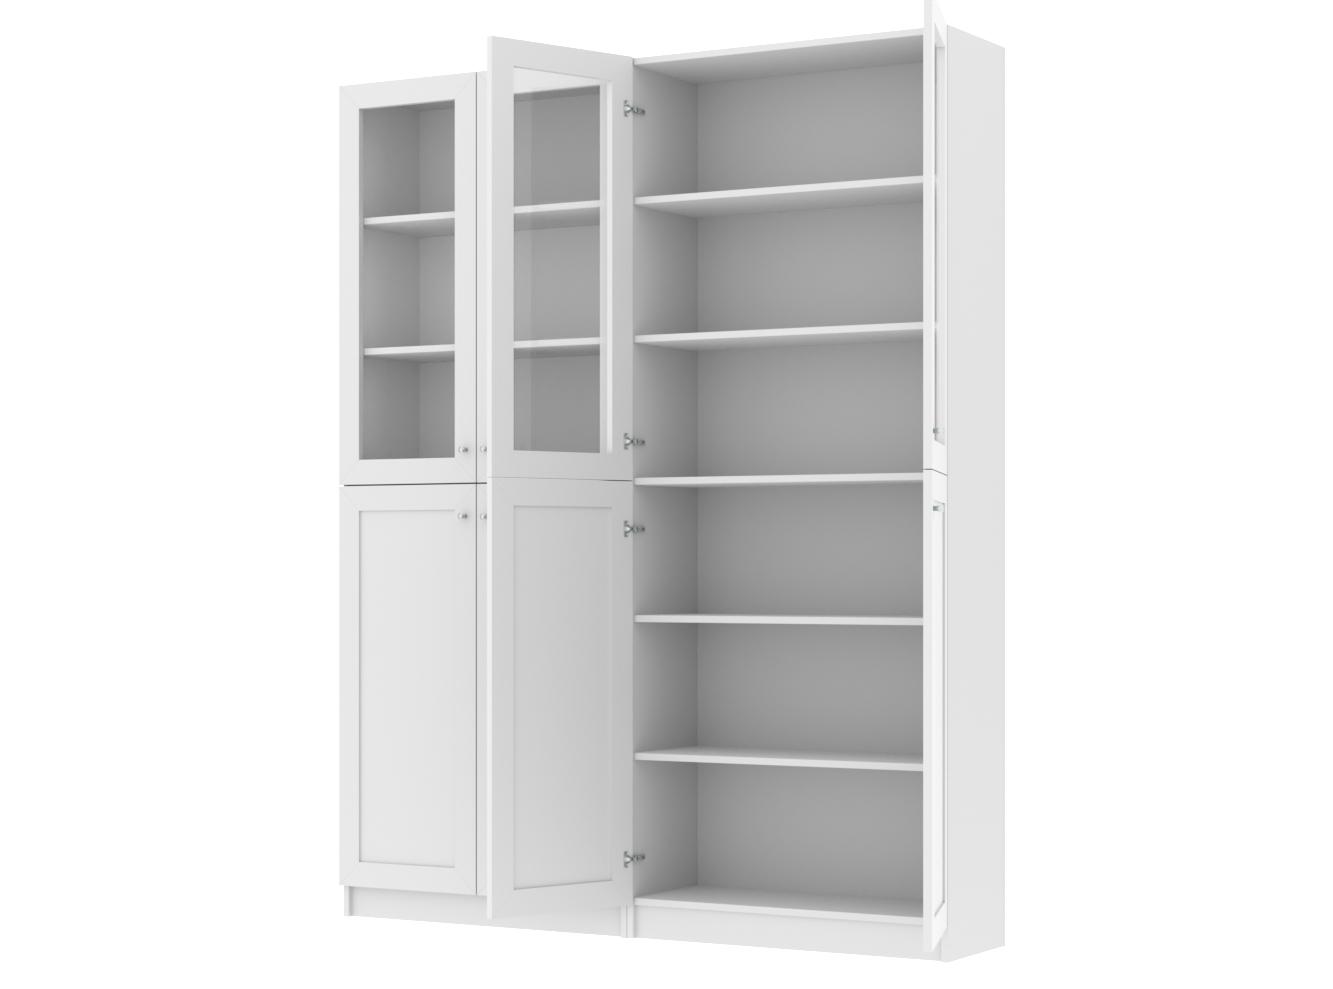 Книжный шкаф Билли 342 white ИКЕА (IKEA) изображение товара